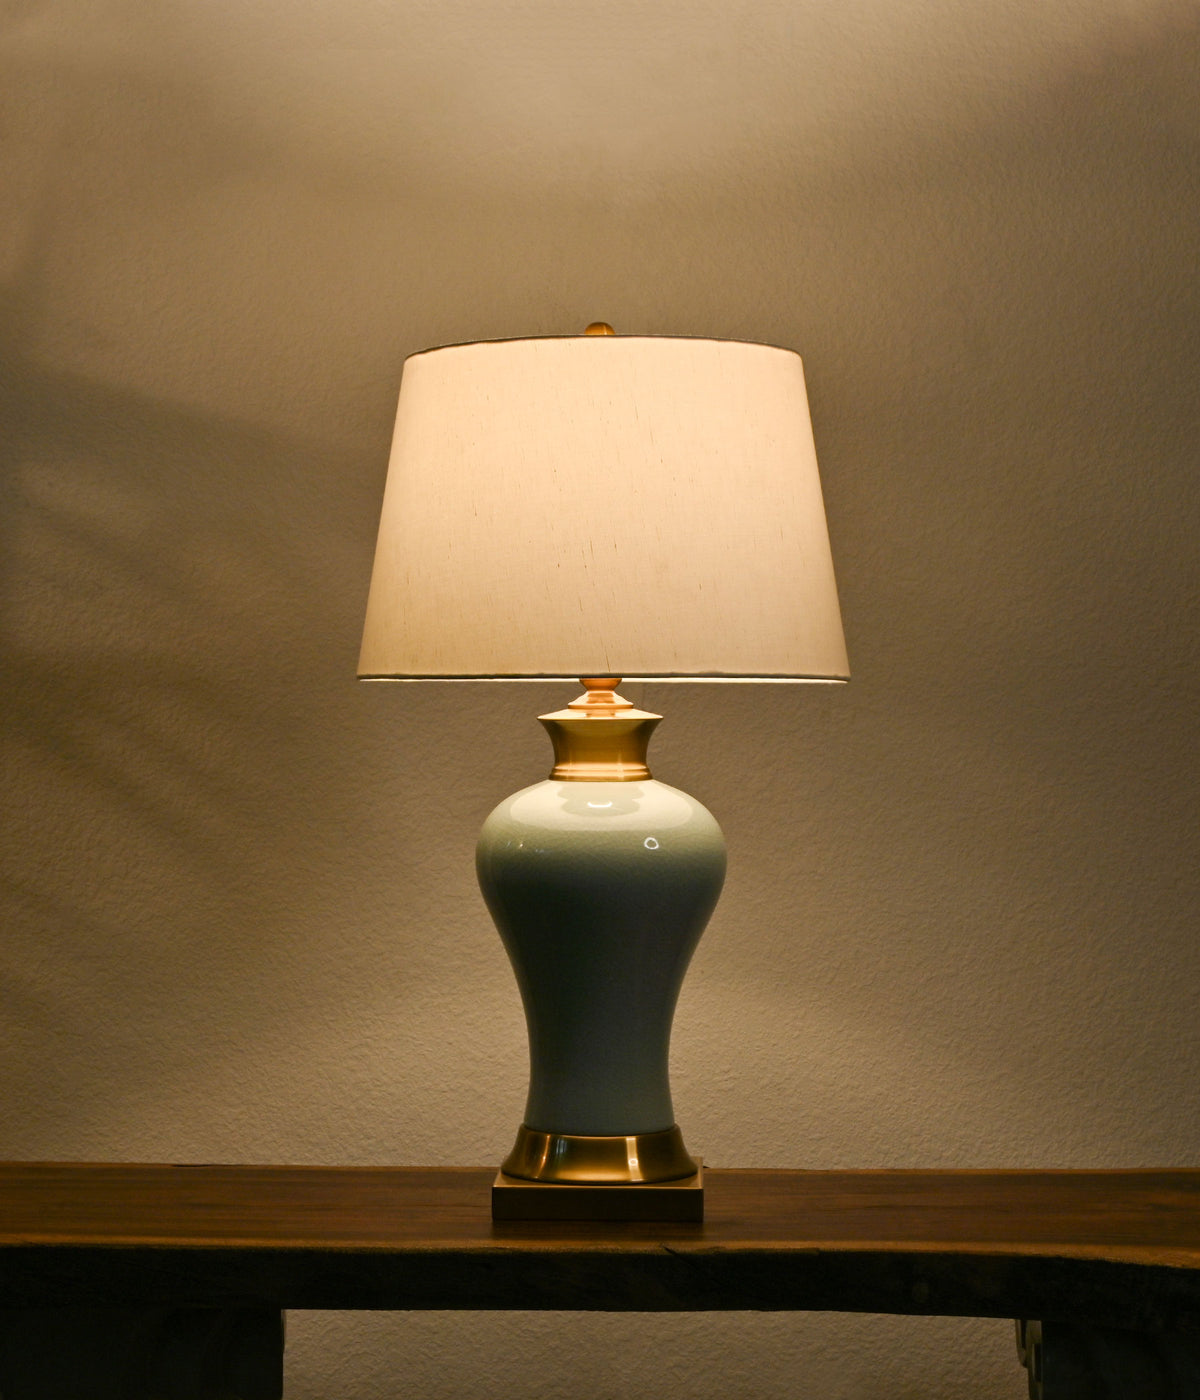 Clay Oasis Illuminator off white shade lamp